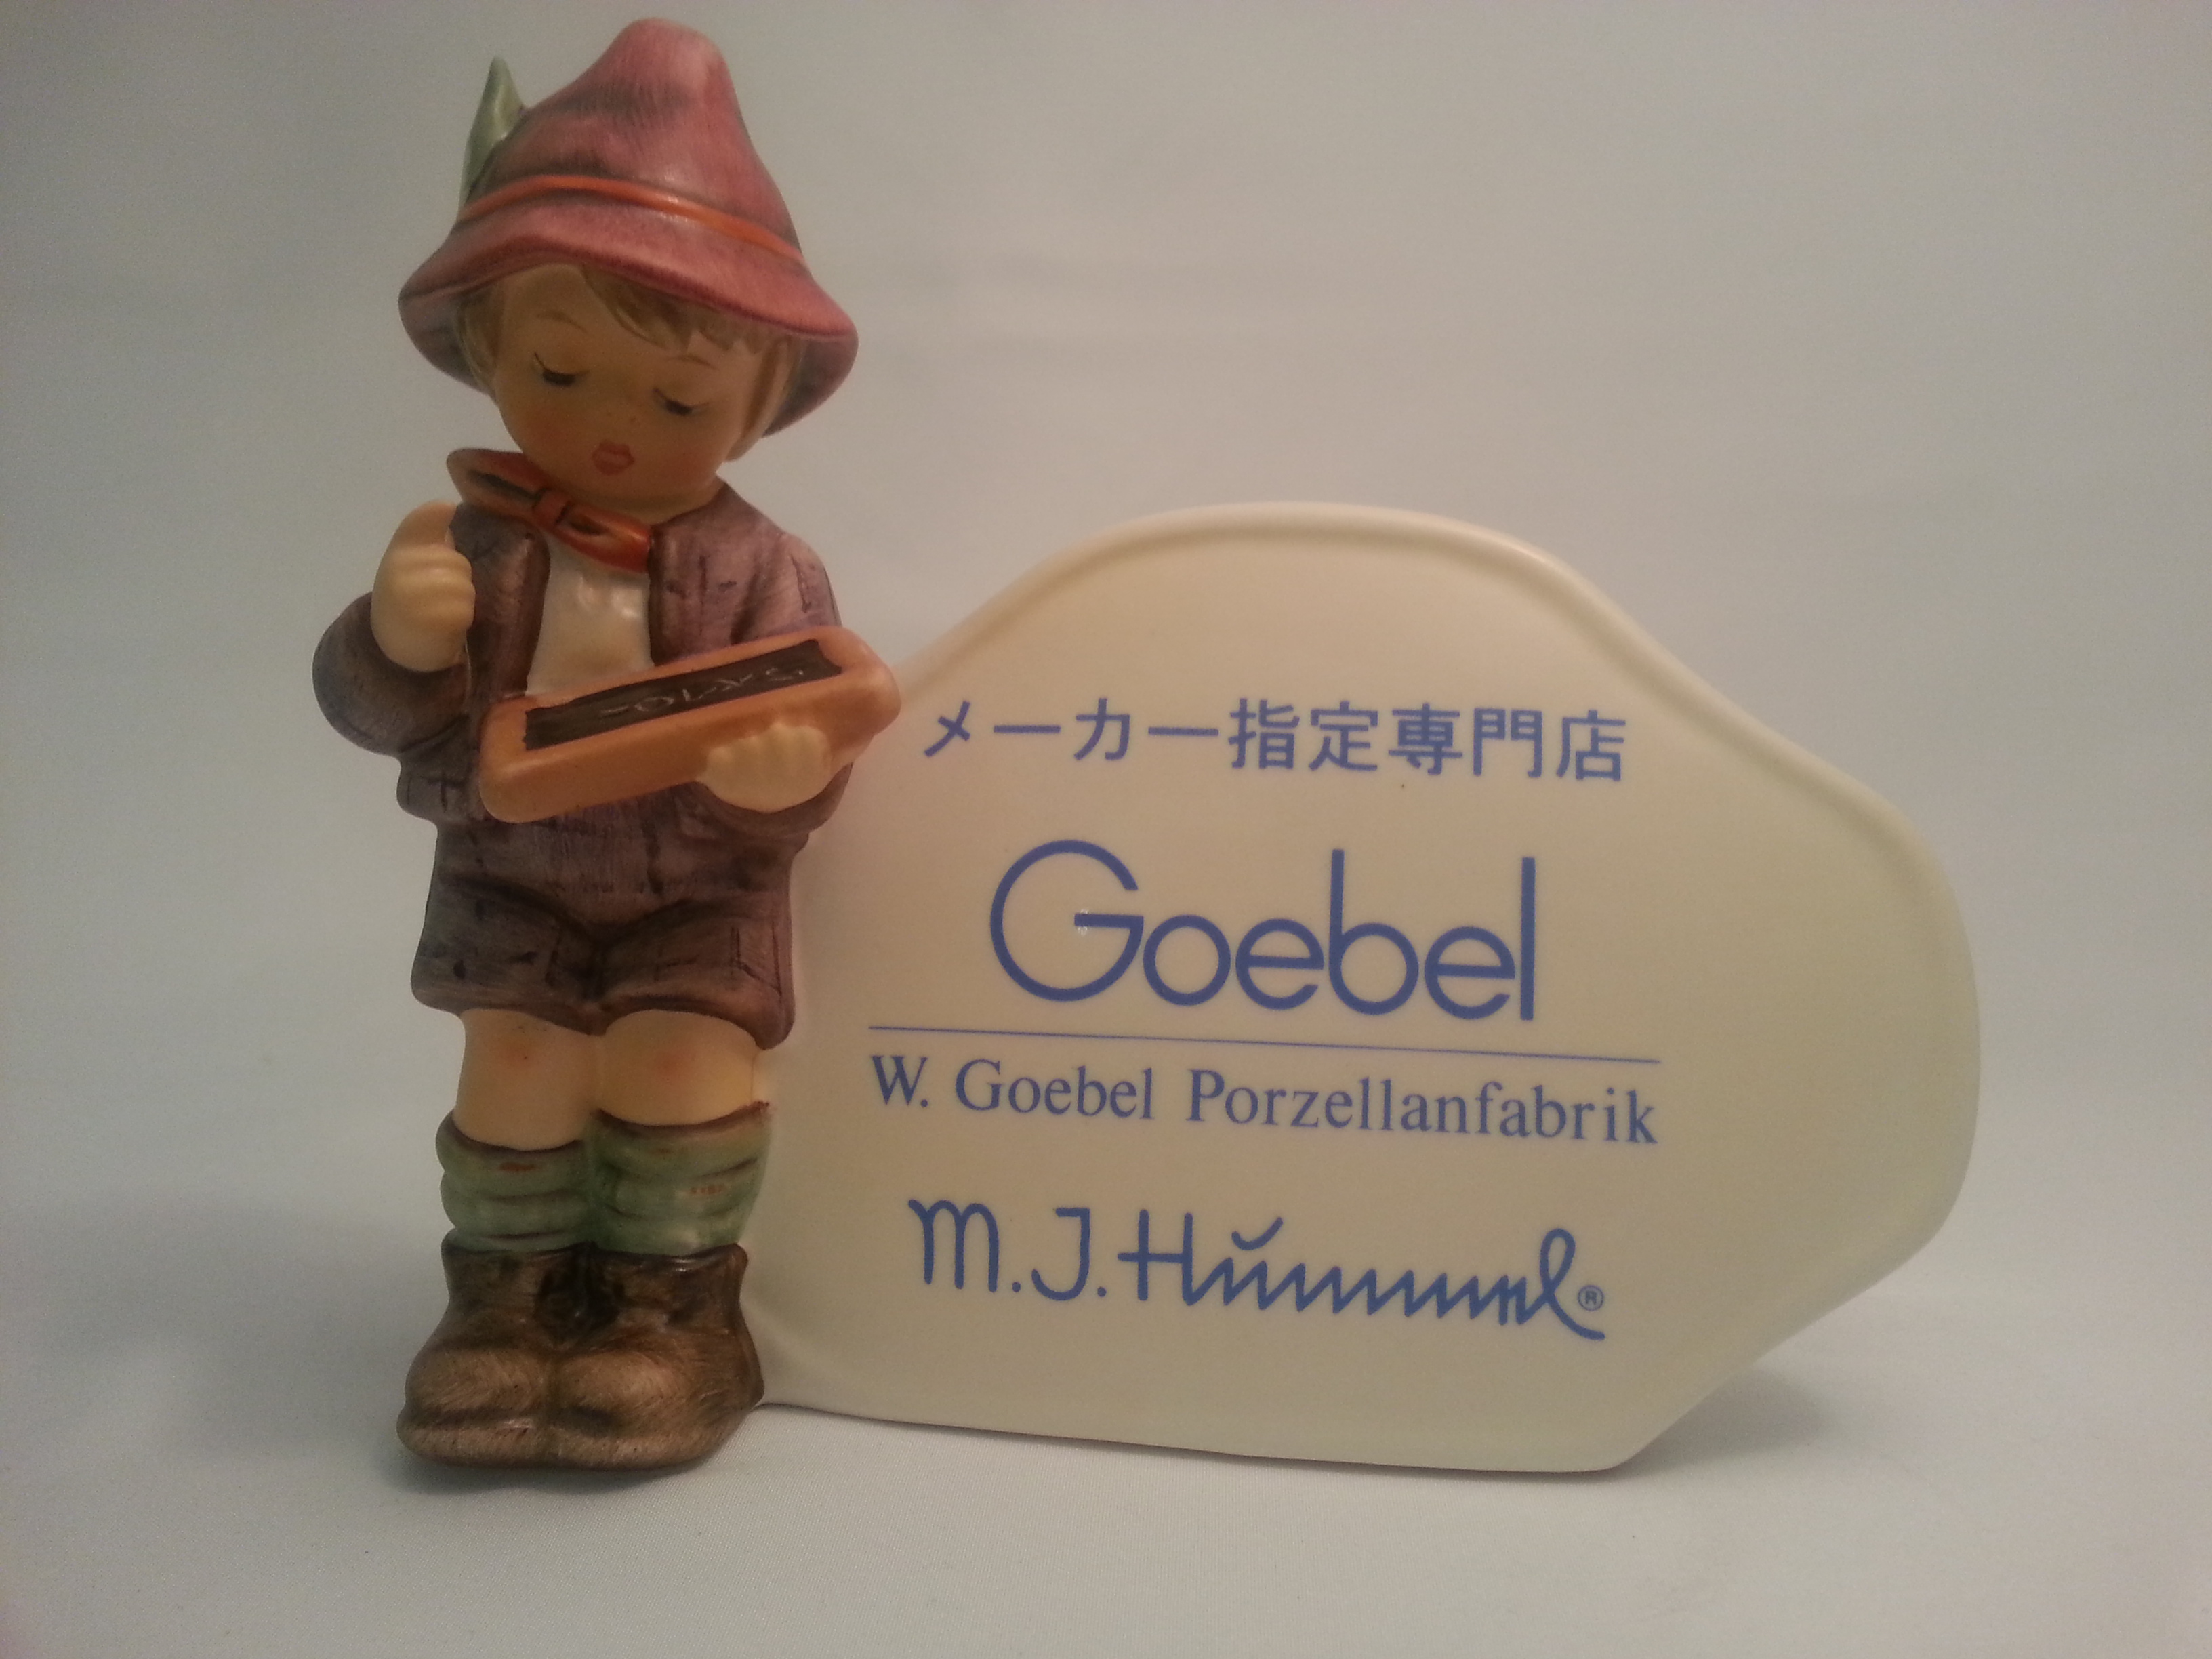 Goebel, Hum 460 JP, OE/7, "Goebel authorized Retailer Plaque, Japanese"